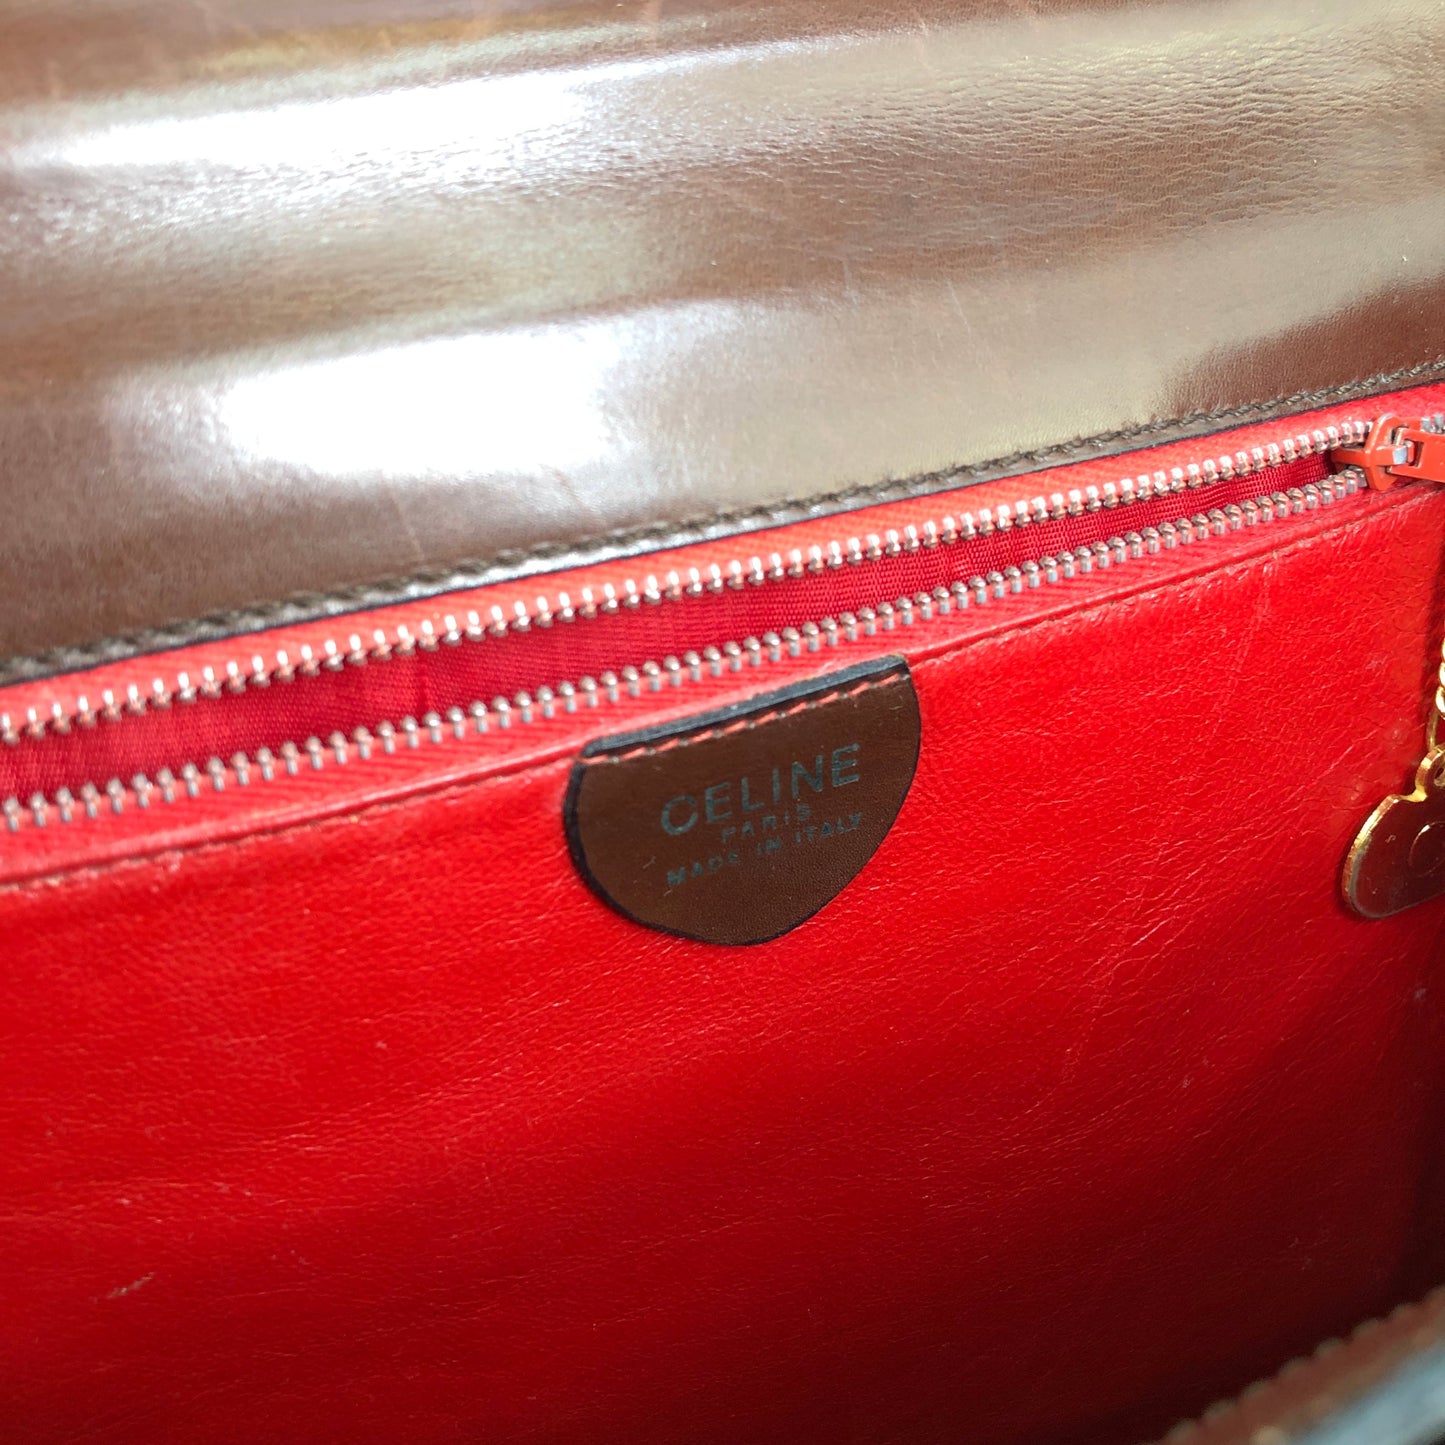 CELINE Triple Gancini Mantel Kelly Leather Handbag Brown vintage Old Celine iz86nn